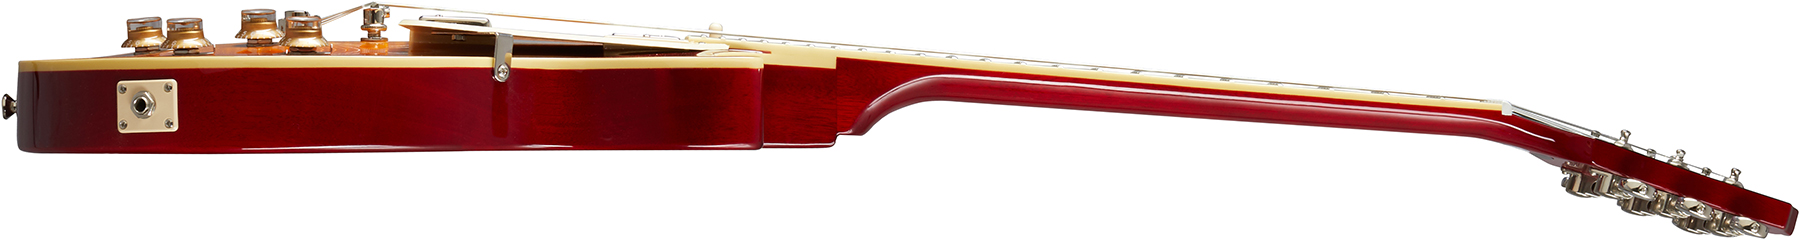 Epiphone Les Paul Standard 60s Gaucher 2h Ht Rw - Iced Tea - Left-handed electric guitar - Variation 2